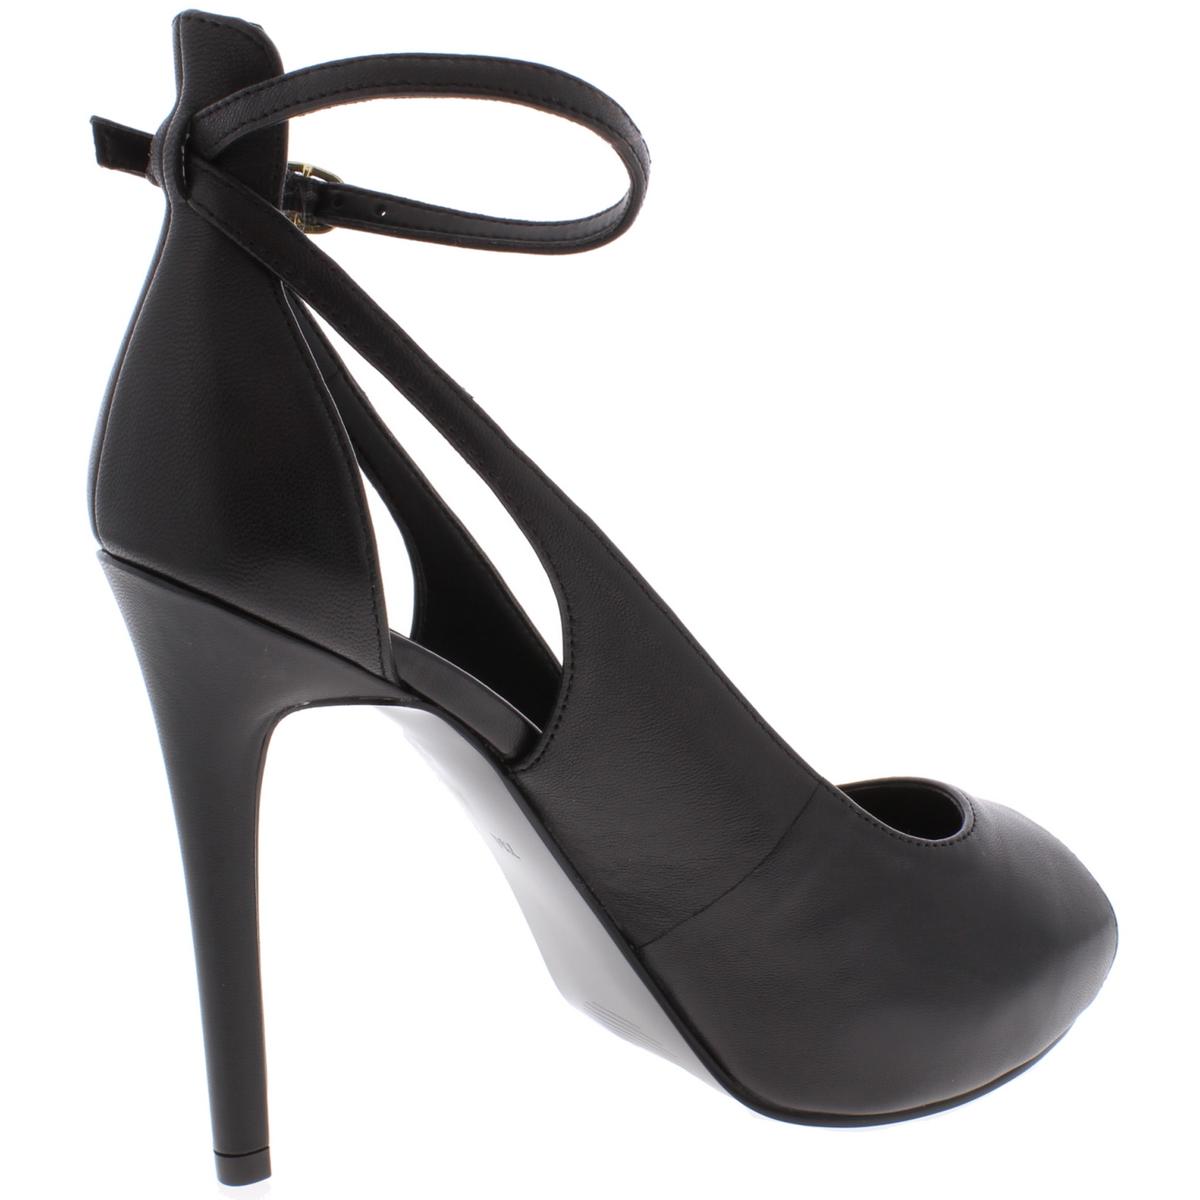 Black mid high heels